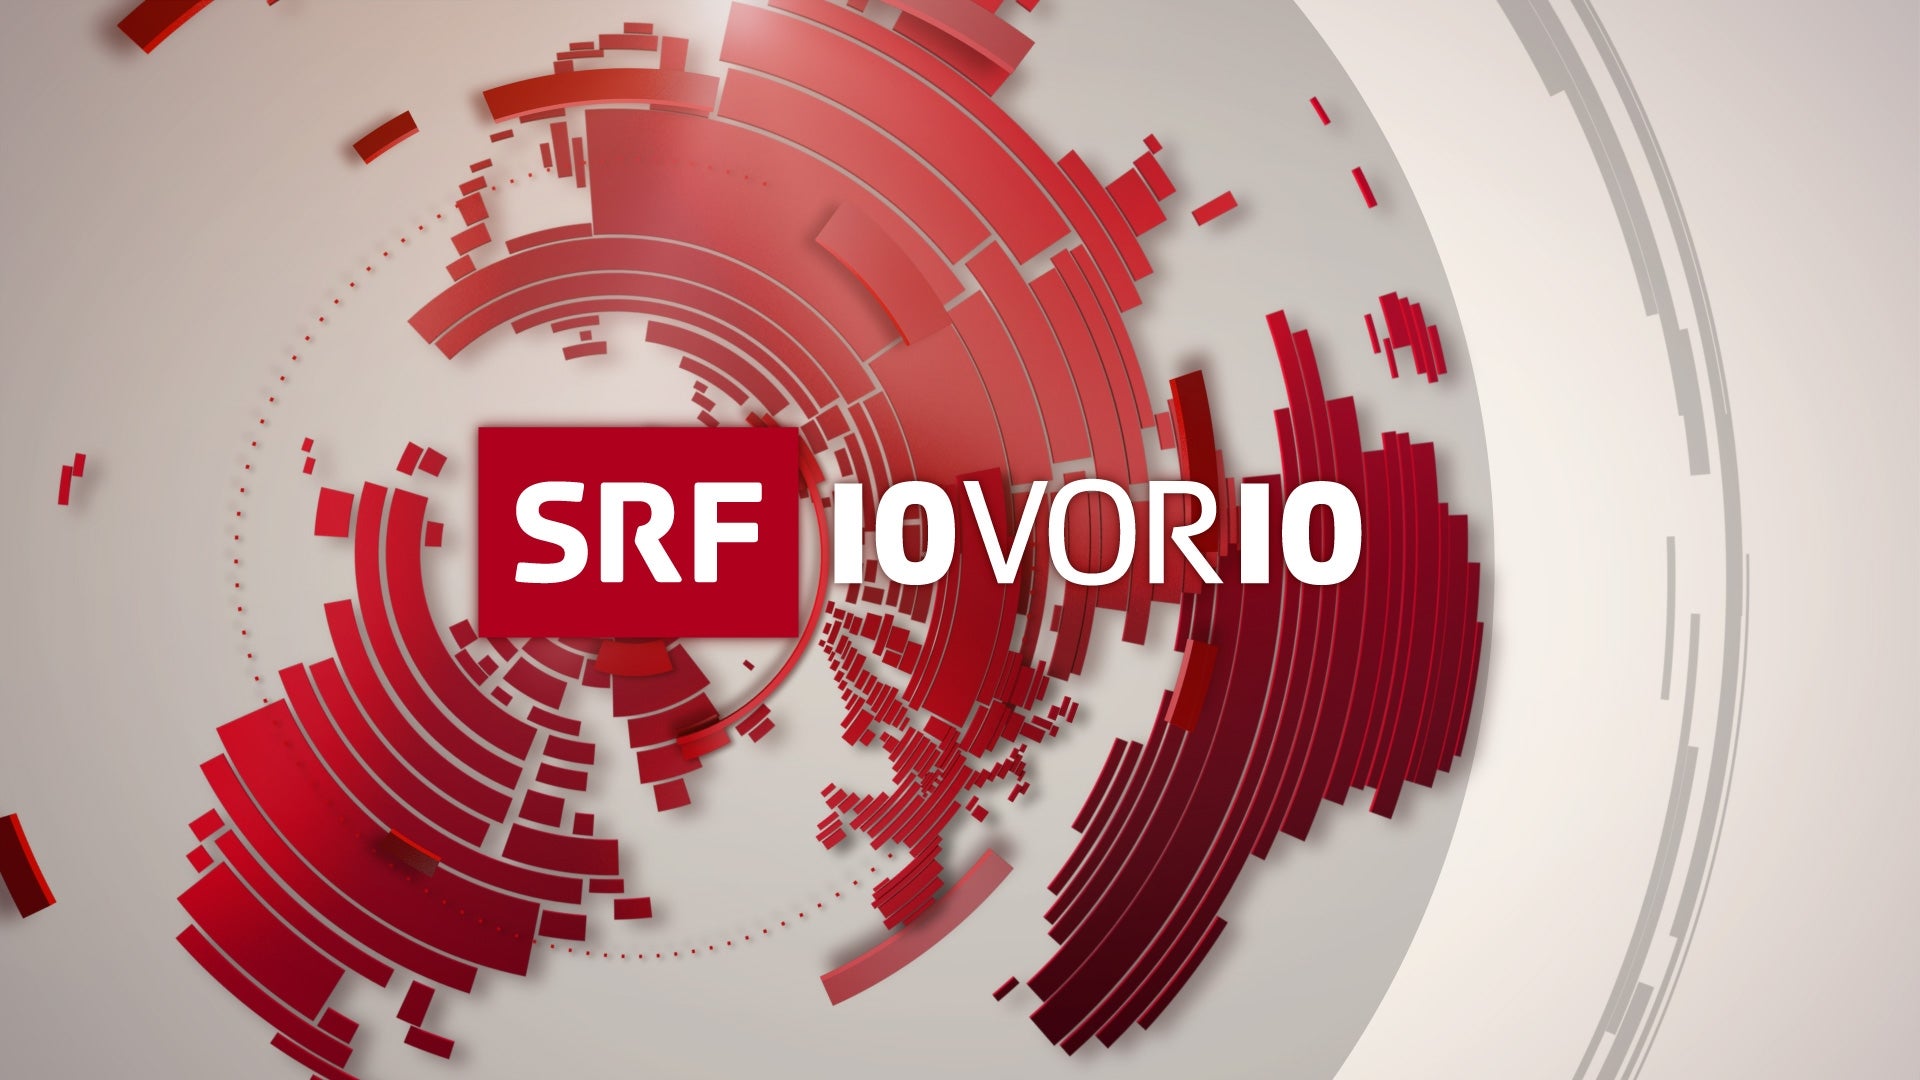 TV ratings for 10vor10 in Philippines. SRF 1 TV series